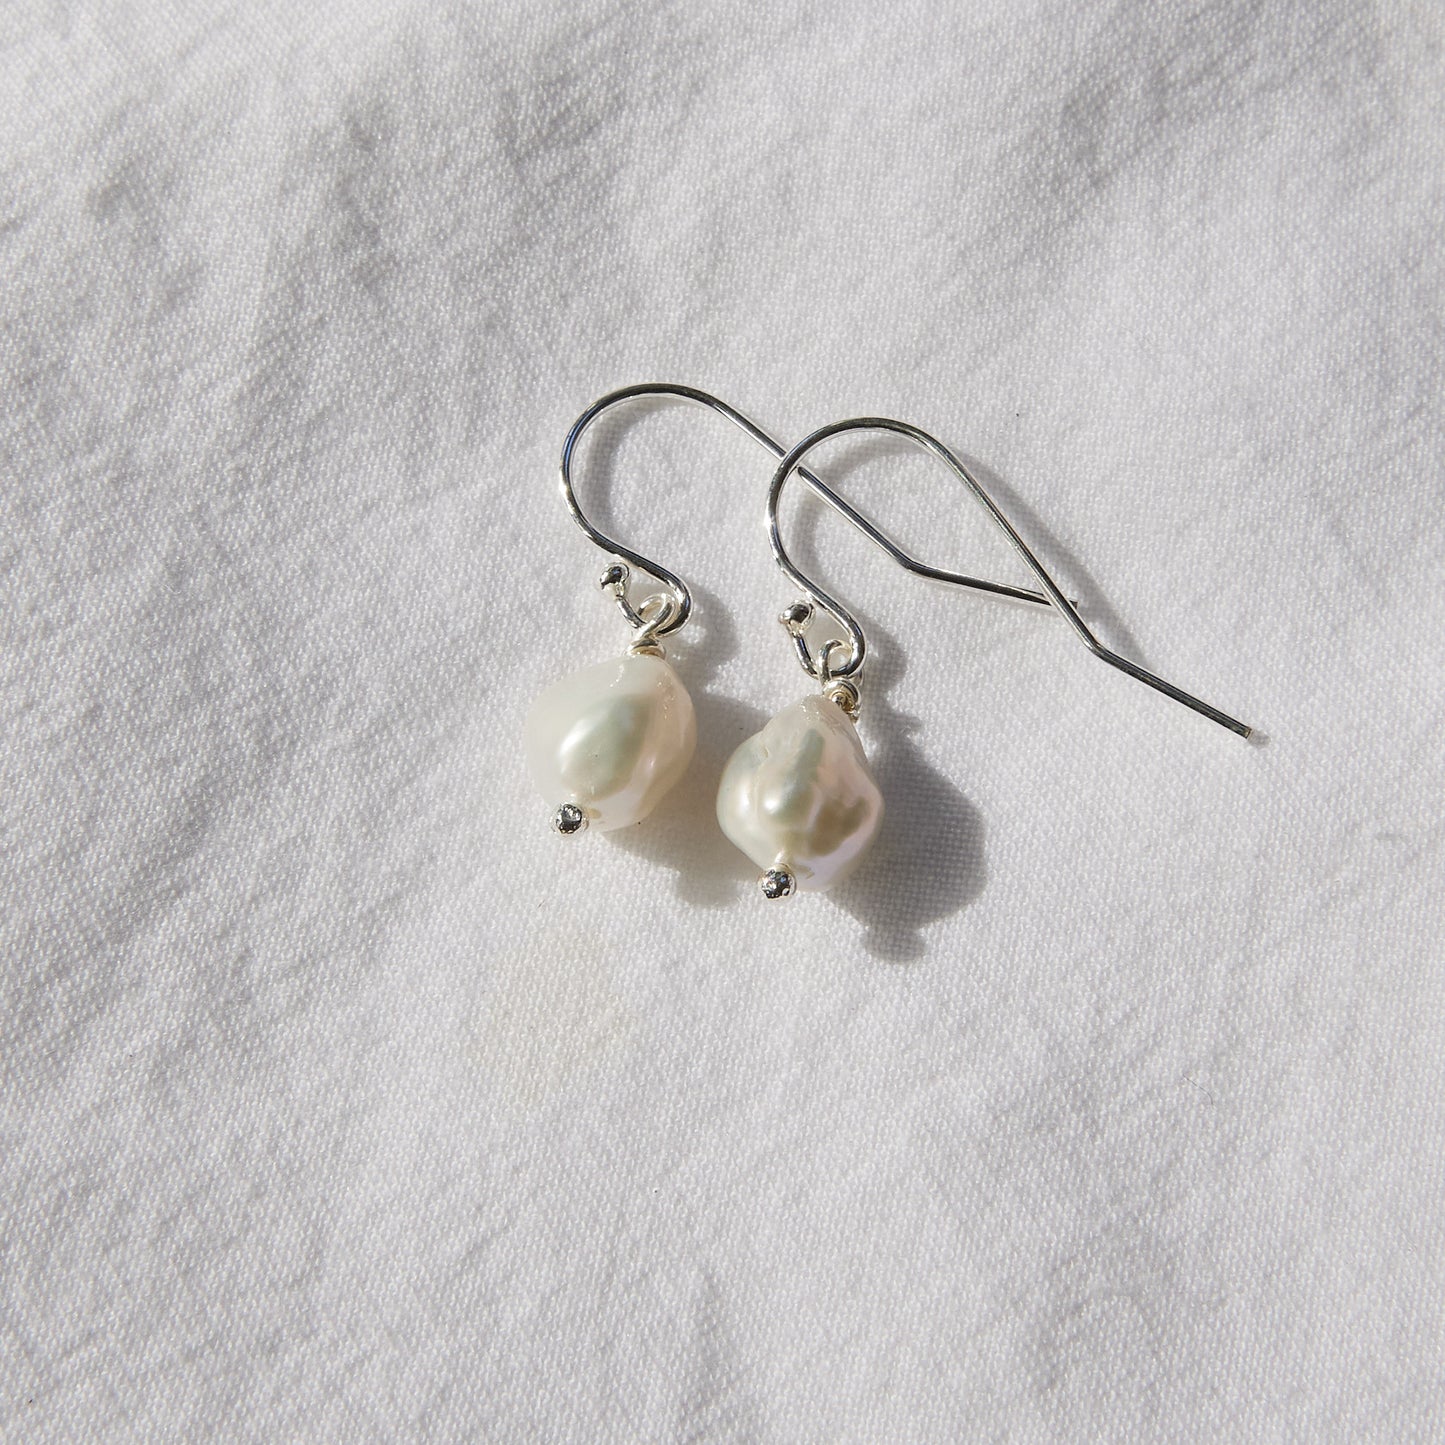 Freshwater pearl hook earrings sterling silver